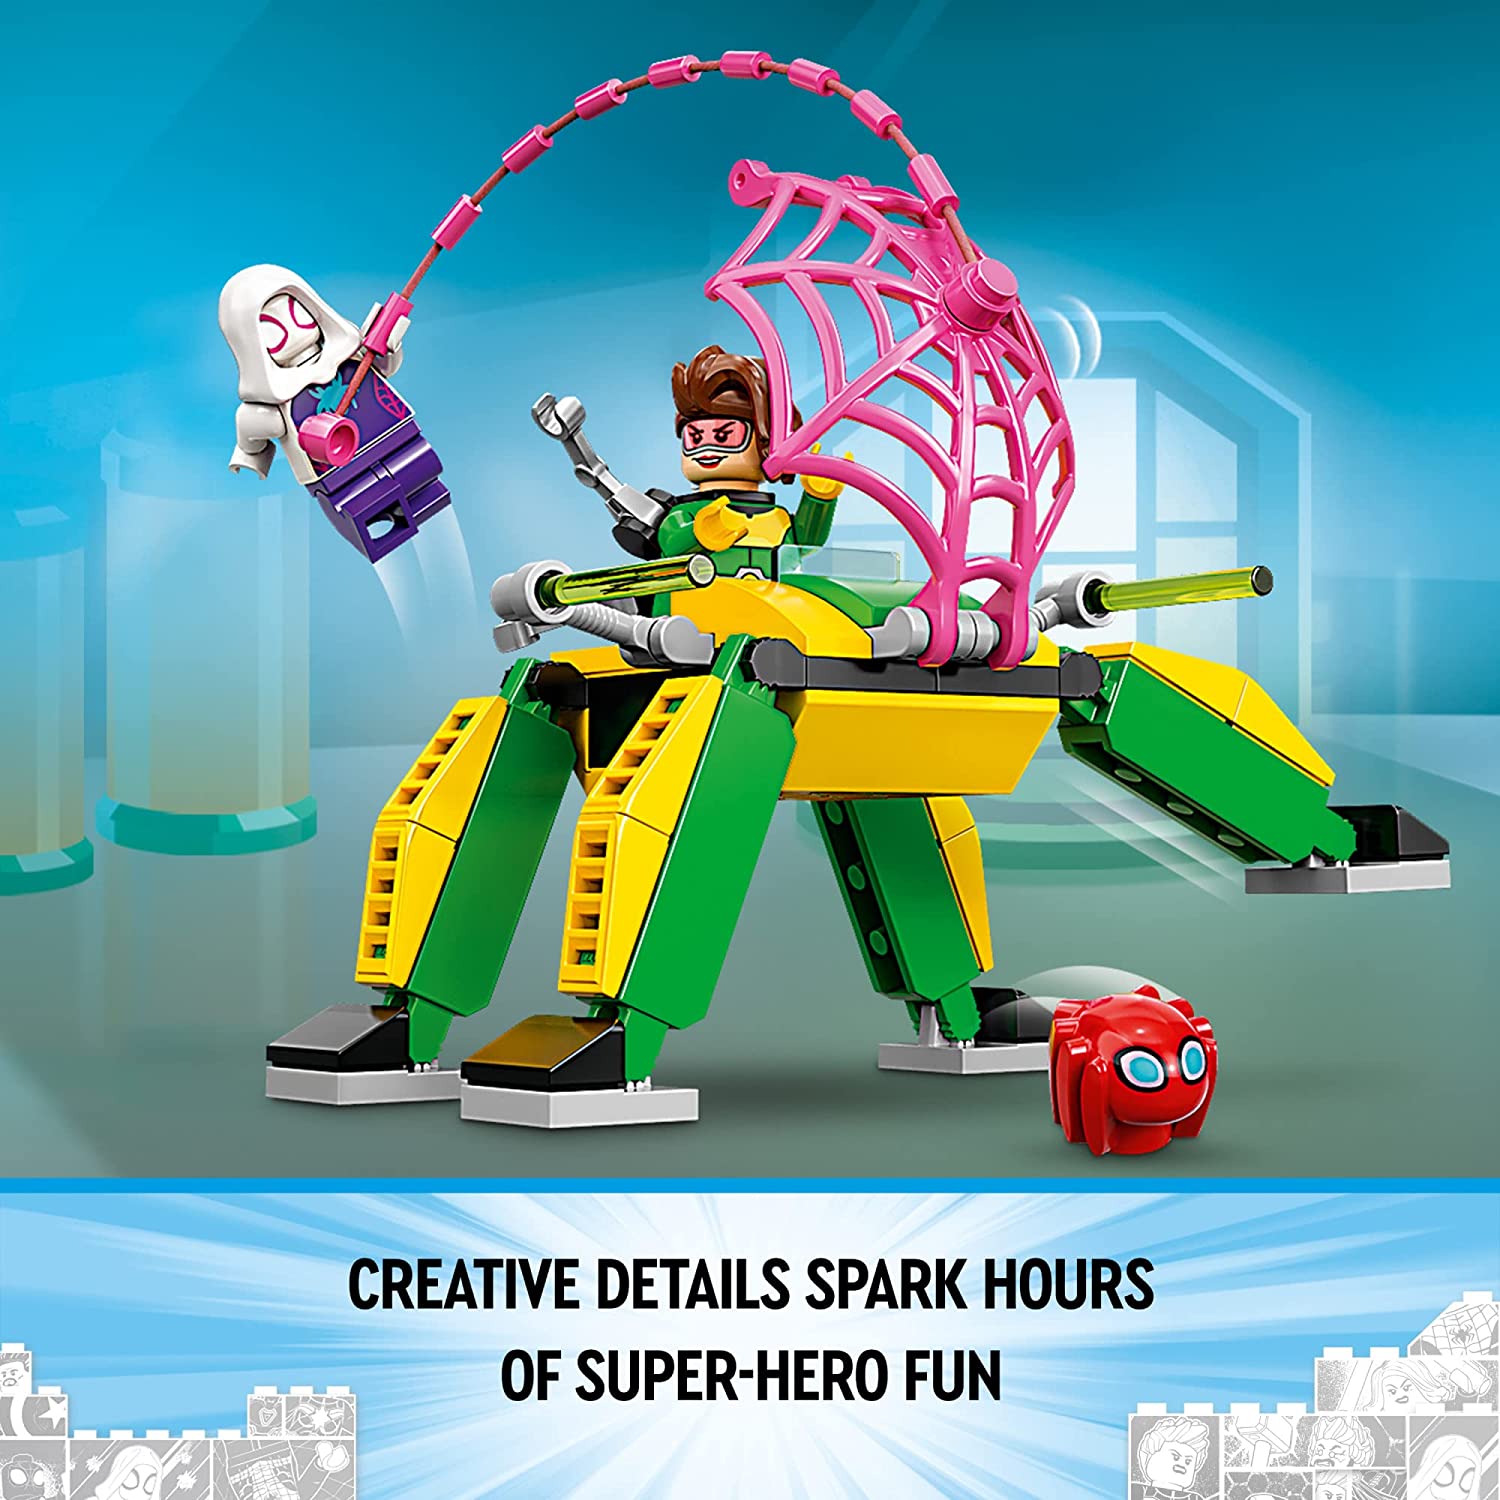 Doctor Octopus (Doc OC) from Spiderman (New)Lego marvel